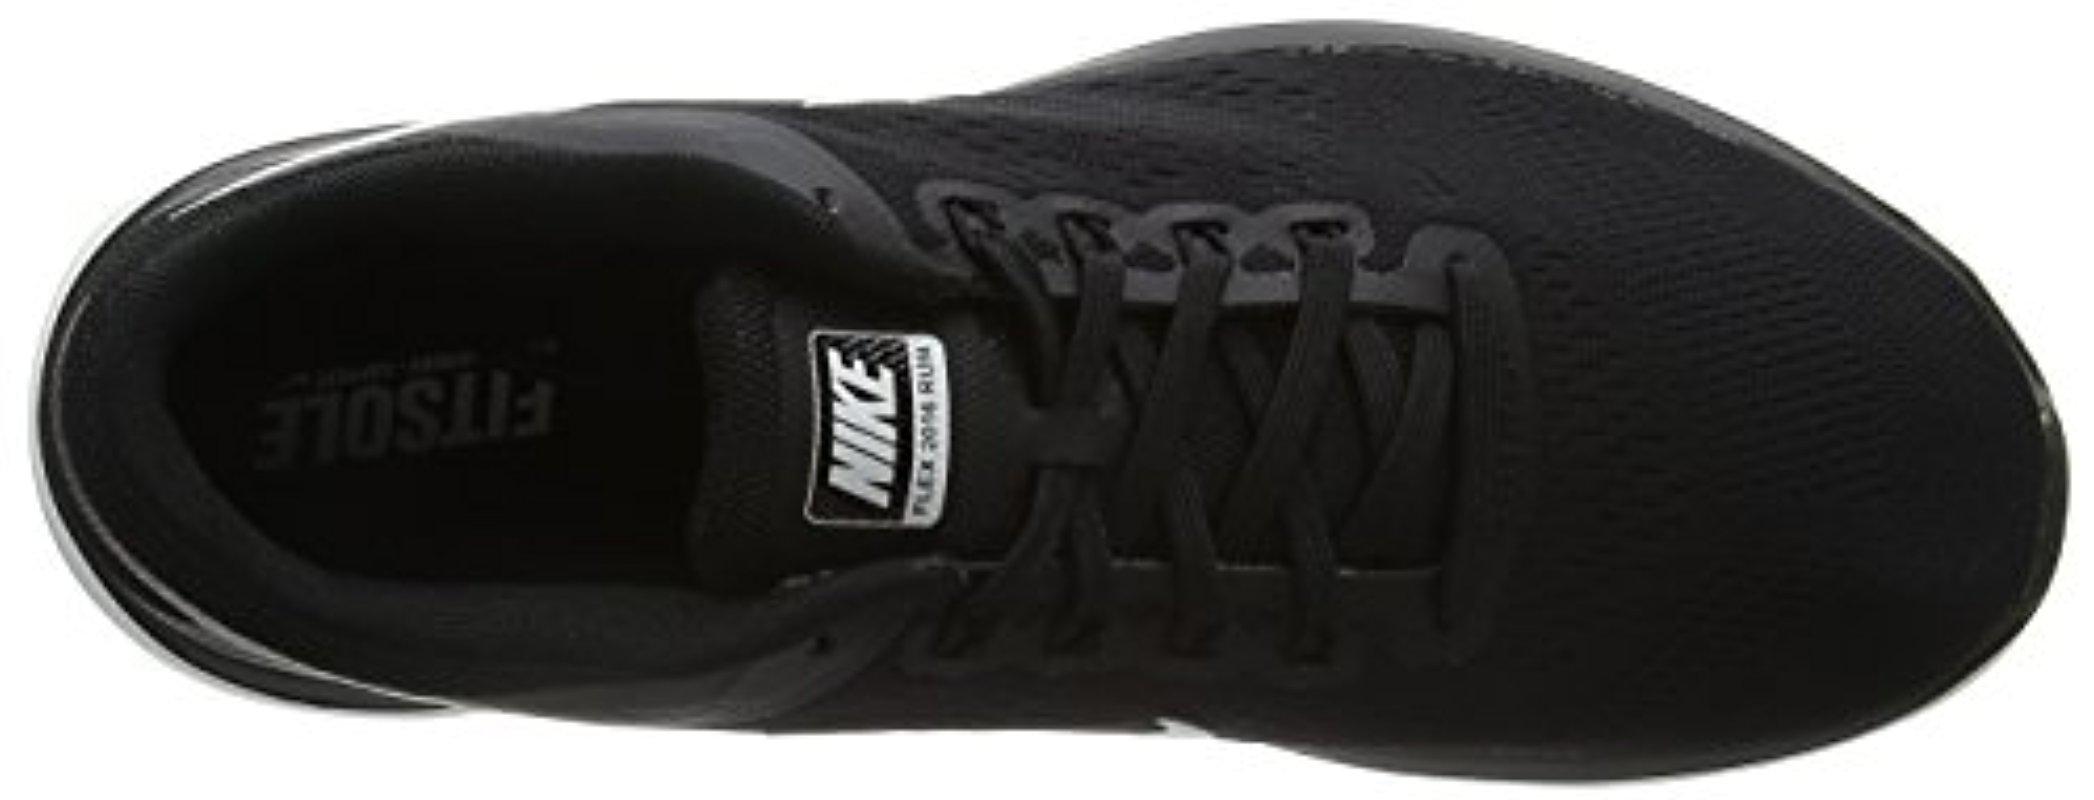 Nike Flex 2016 Rn Running Shoes in Black/White/Cool Grey (Black) | Lyst